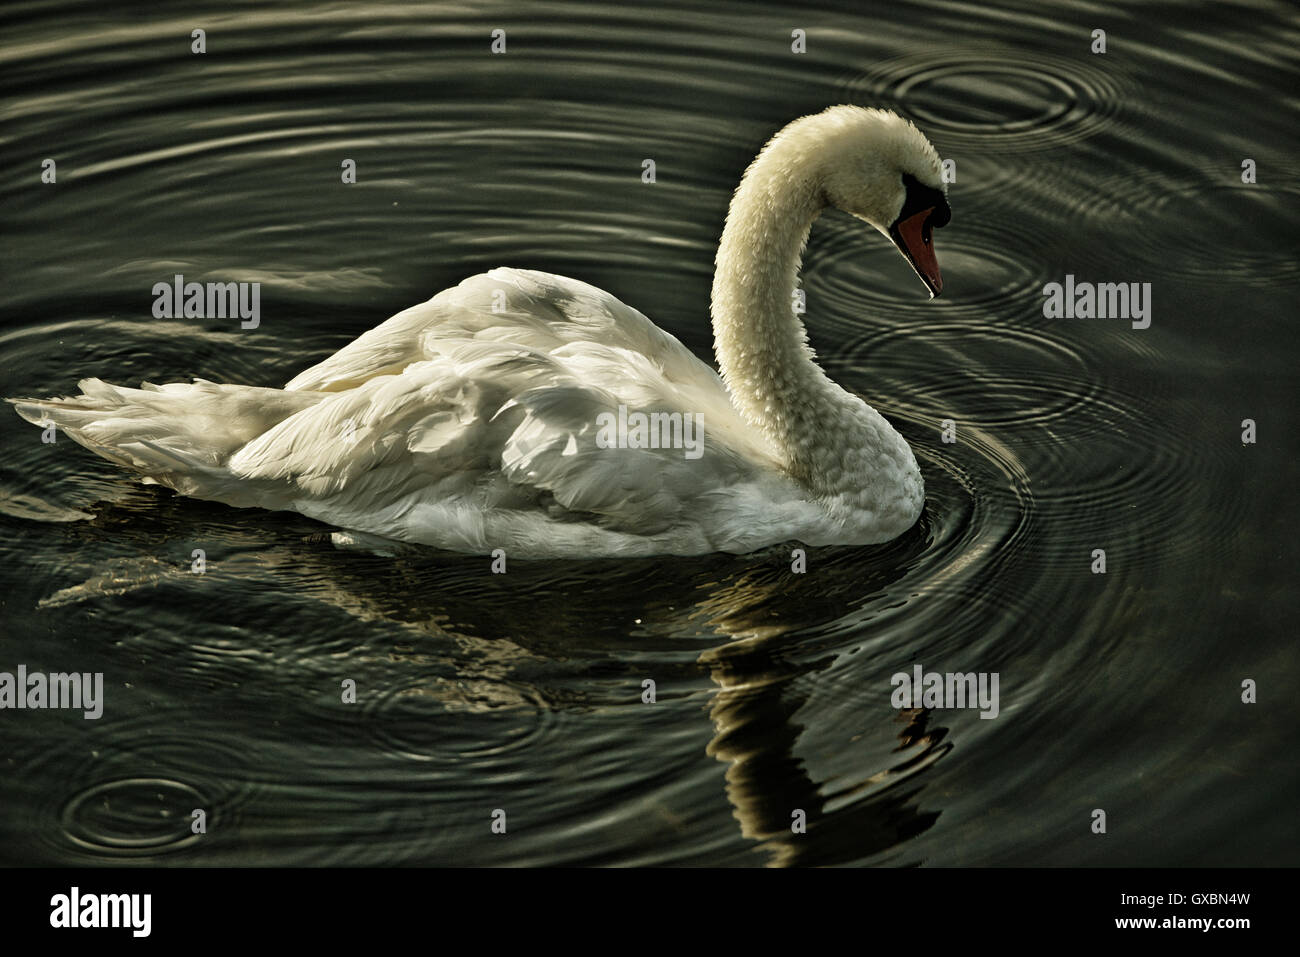 'Golden swan' Stock Photo